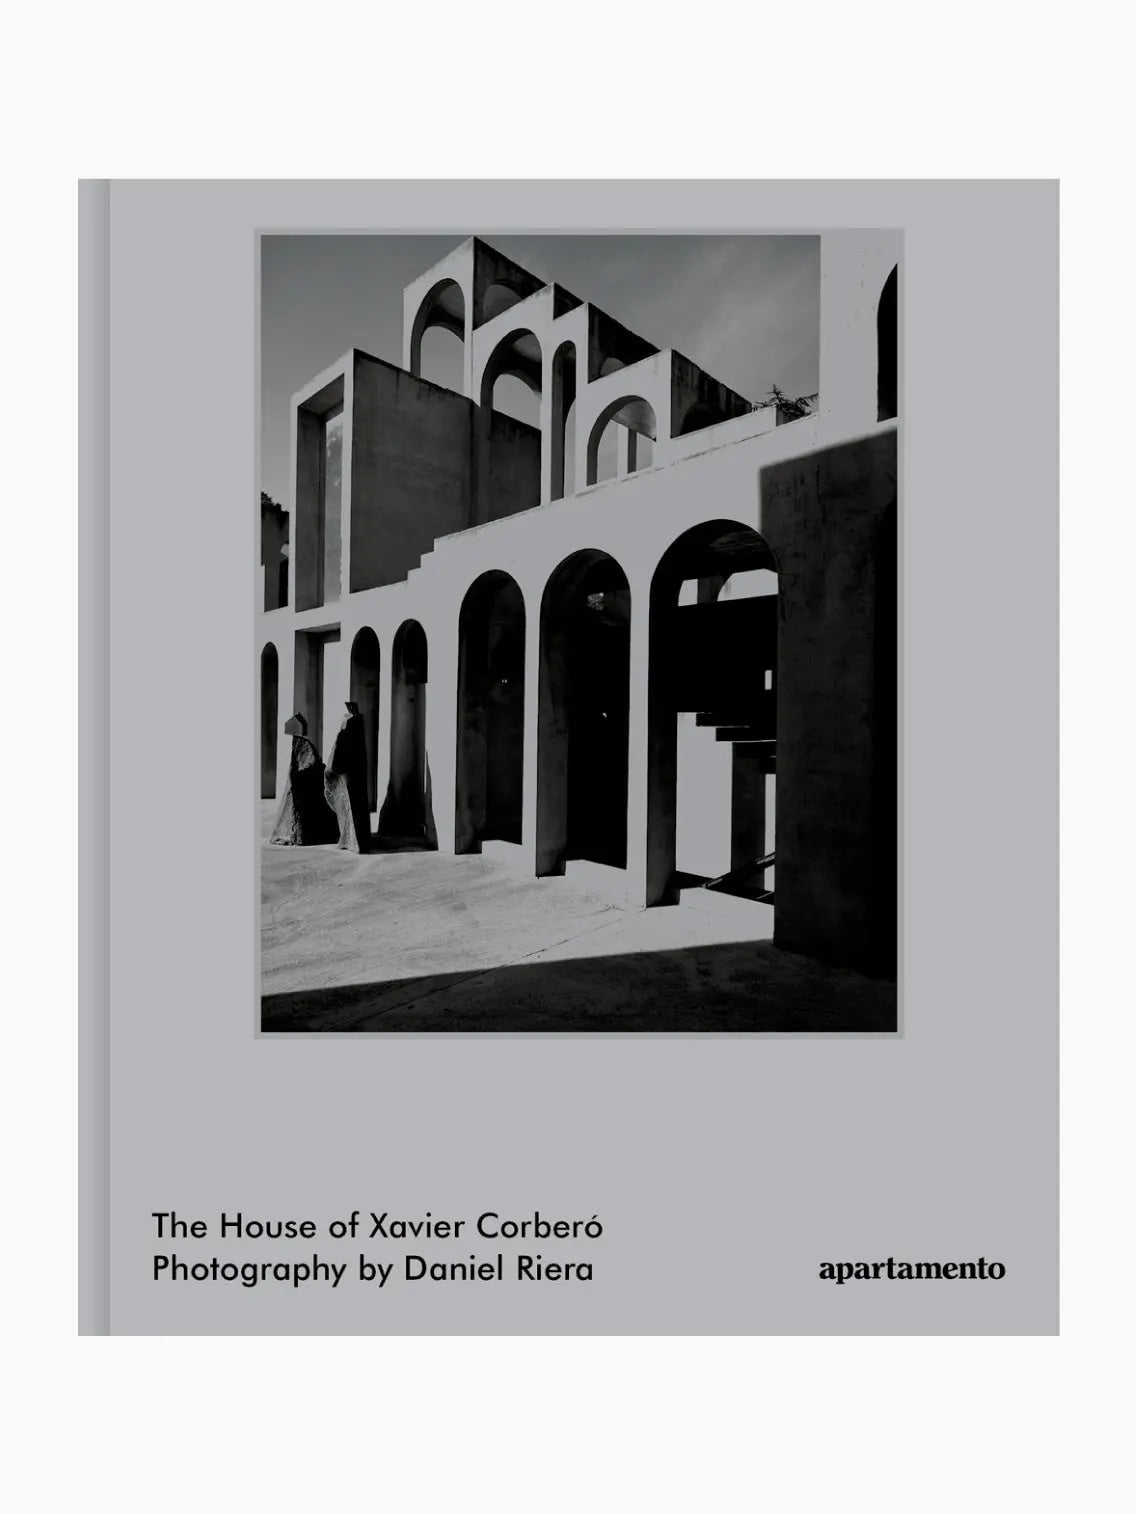 The House of Xavier Corberó Apartamento